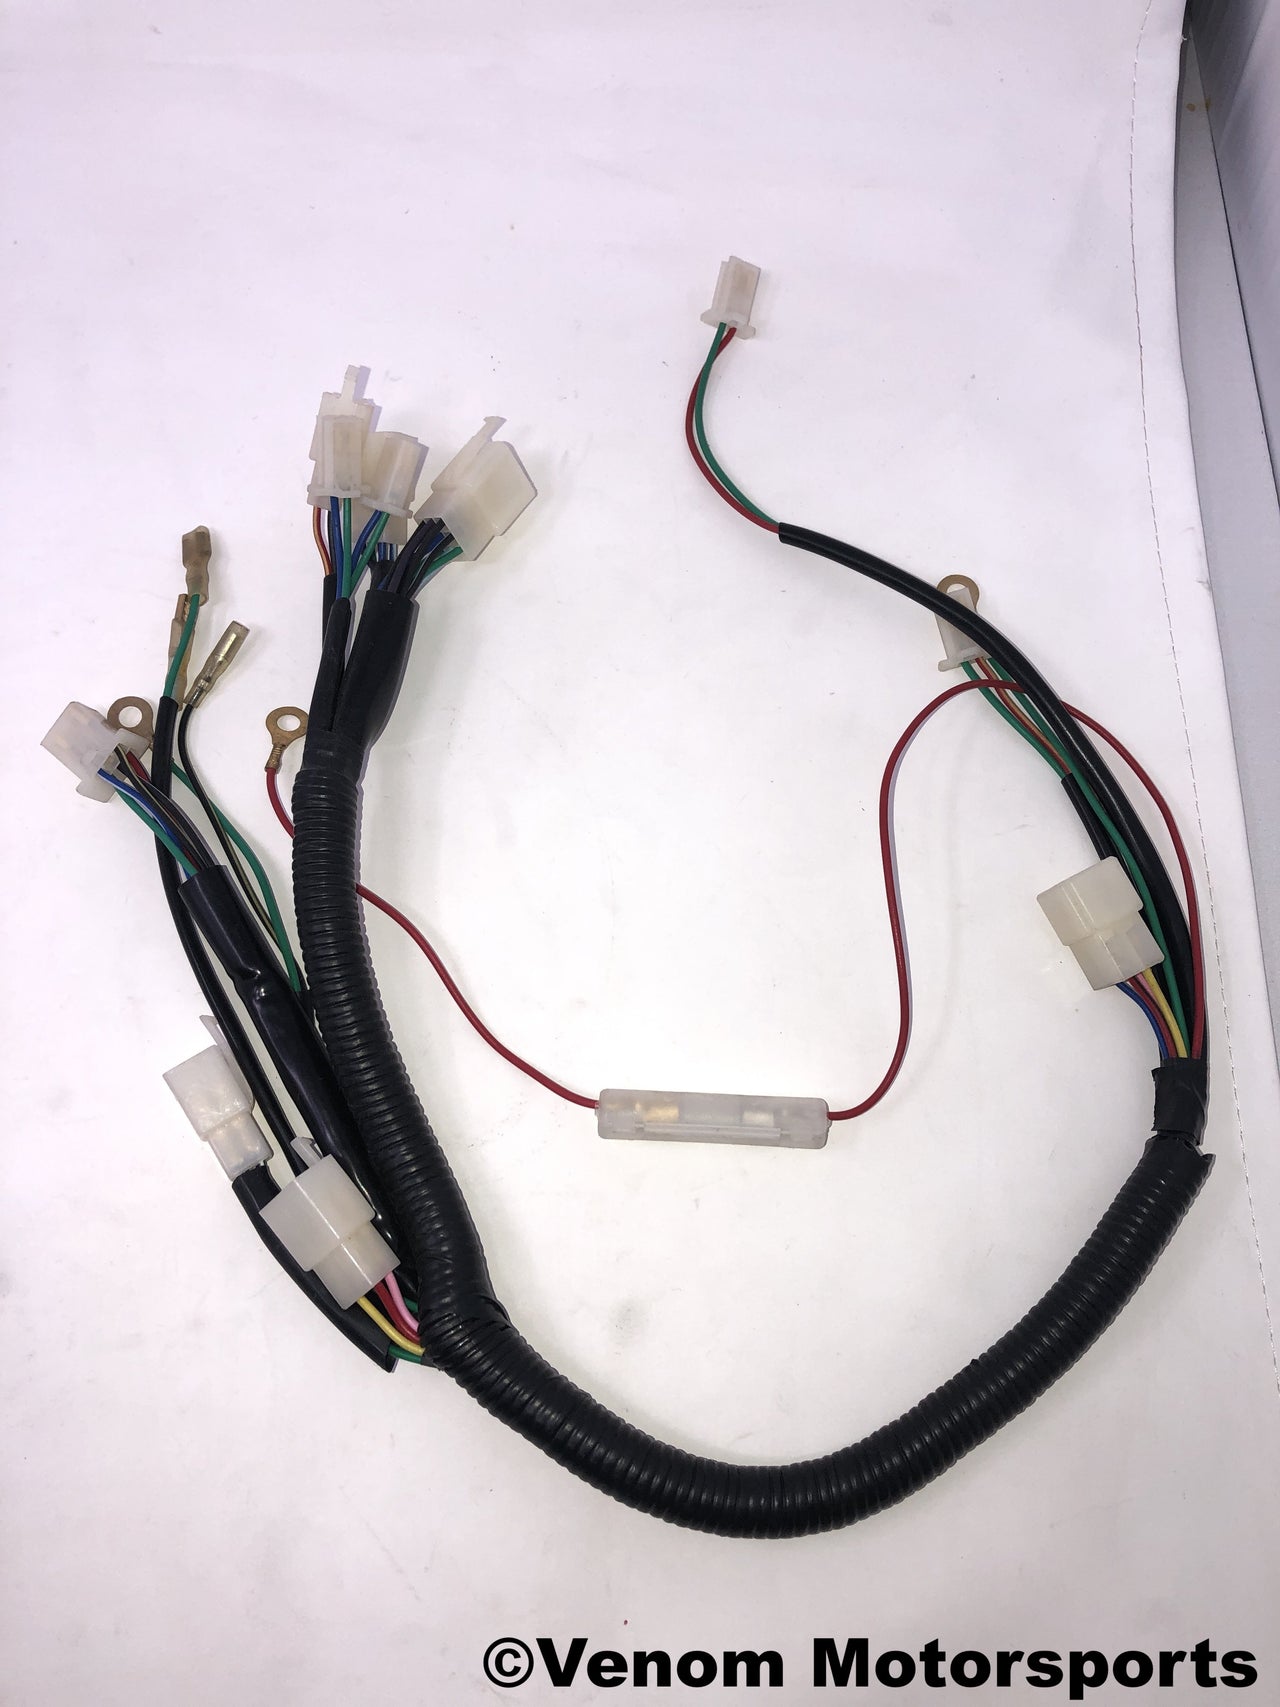 Replacement Wiring Harness | Venom 50cc Fatboy 202050010